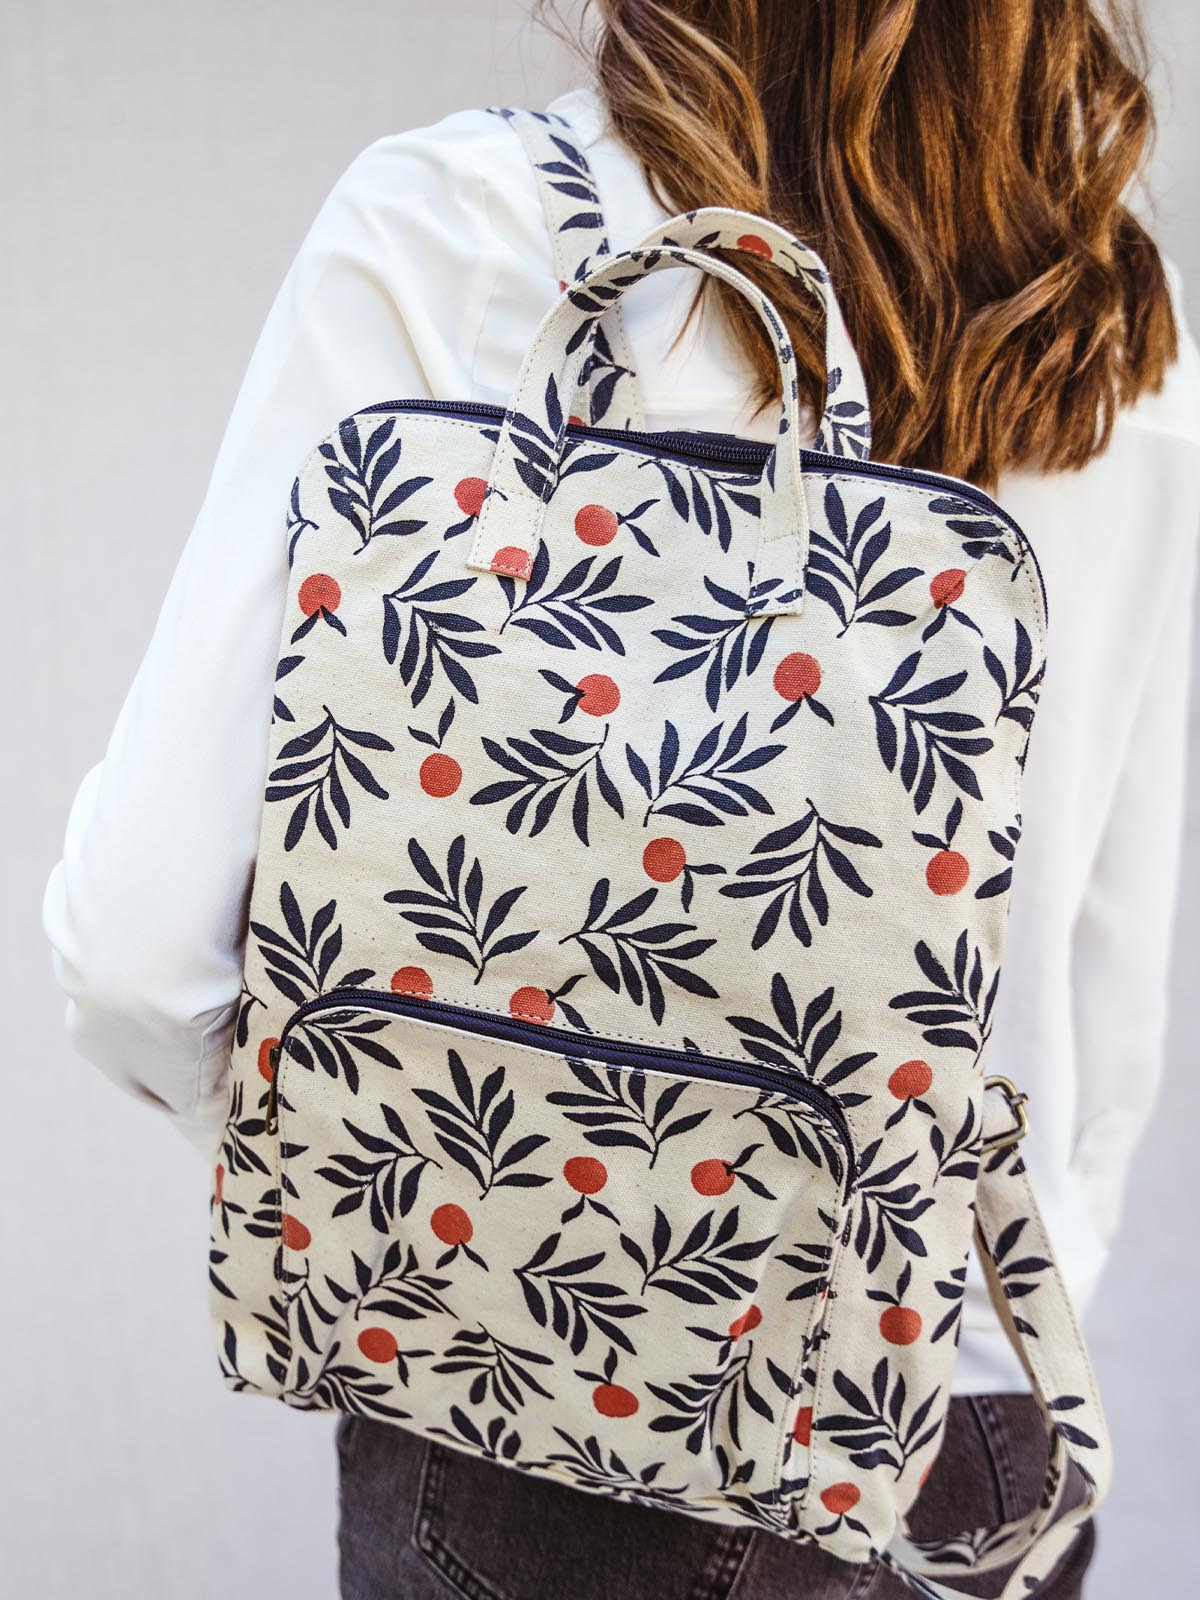 Female model wearing berry pattern backpack over one shoulder.